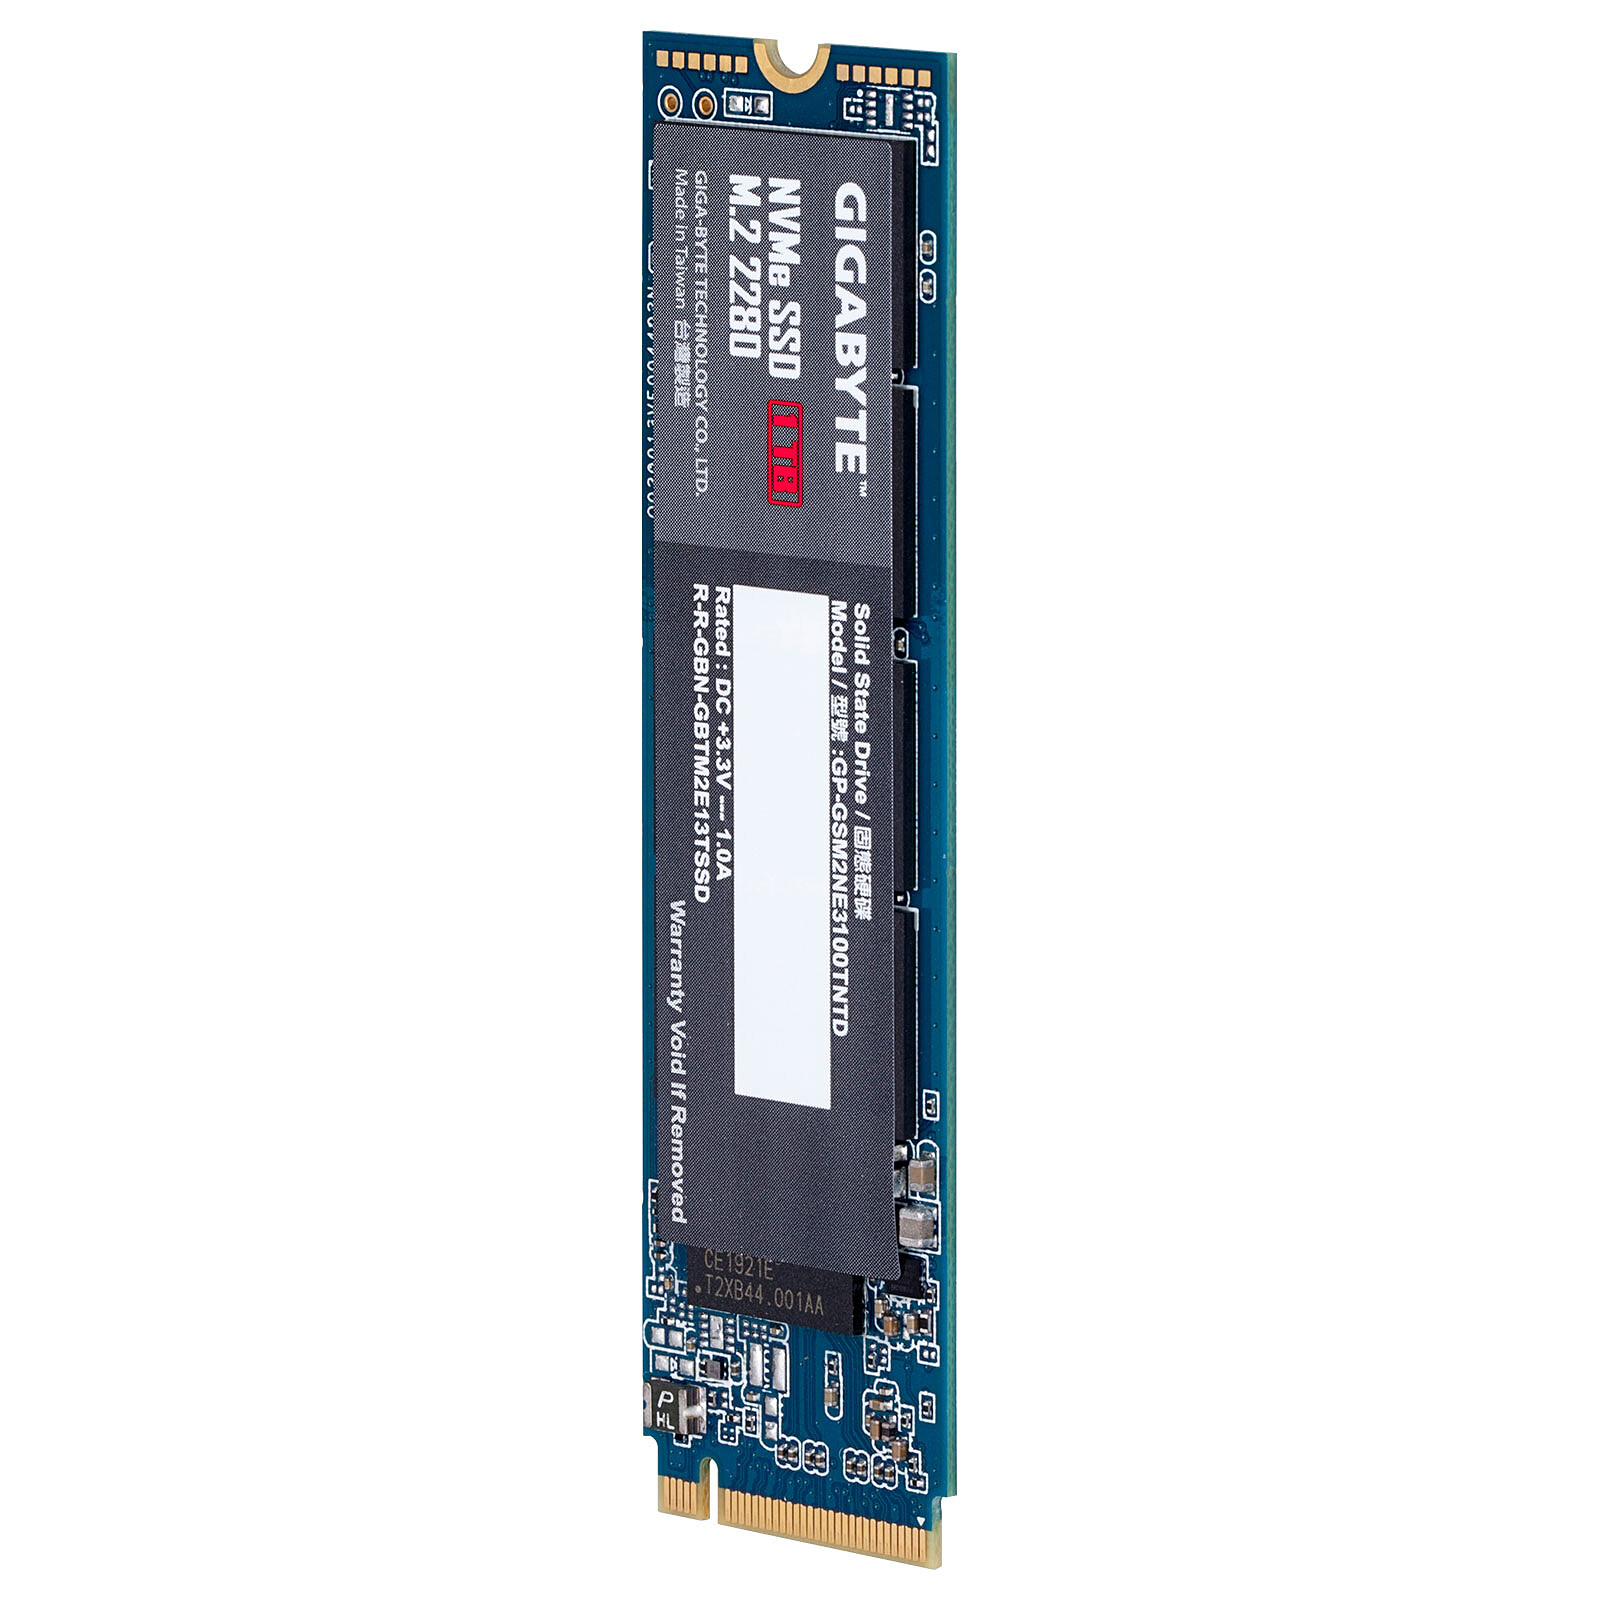 Micron 2400 2 To - Format 2230 - Disque SSD - Garantie 3 ans LDLC